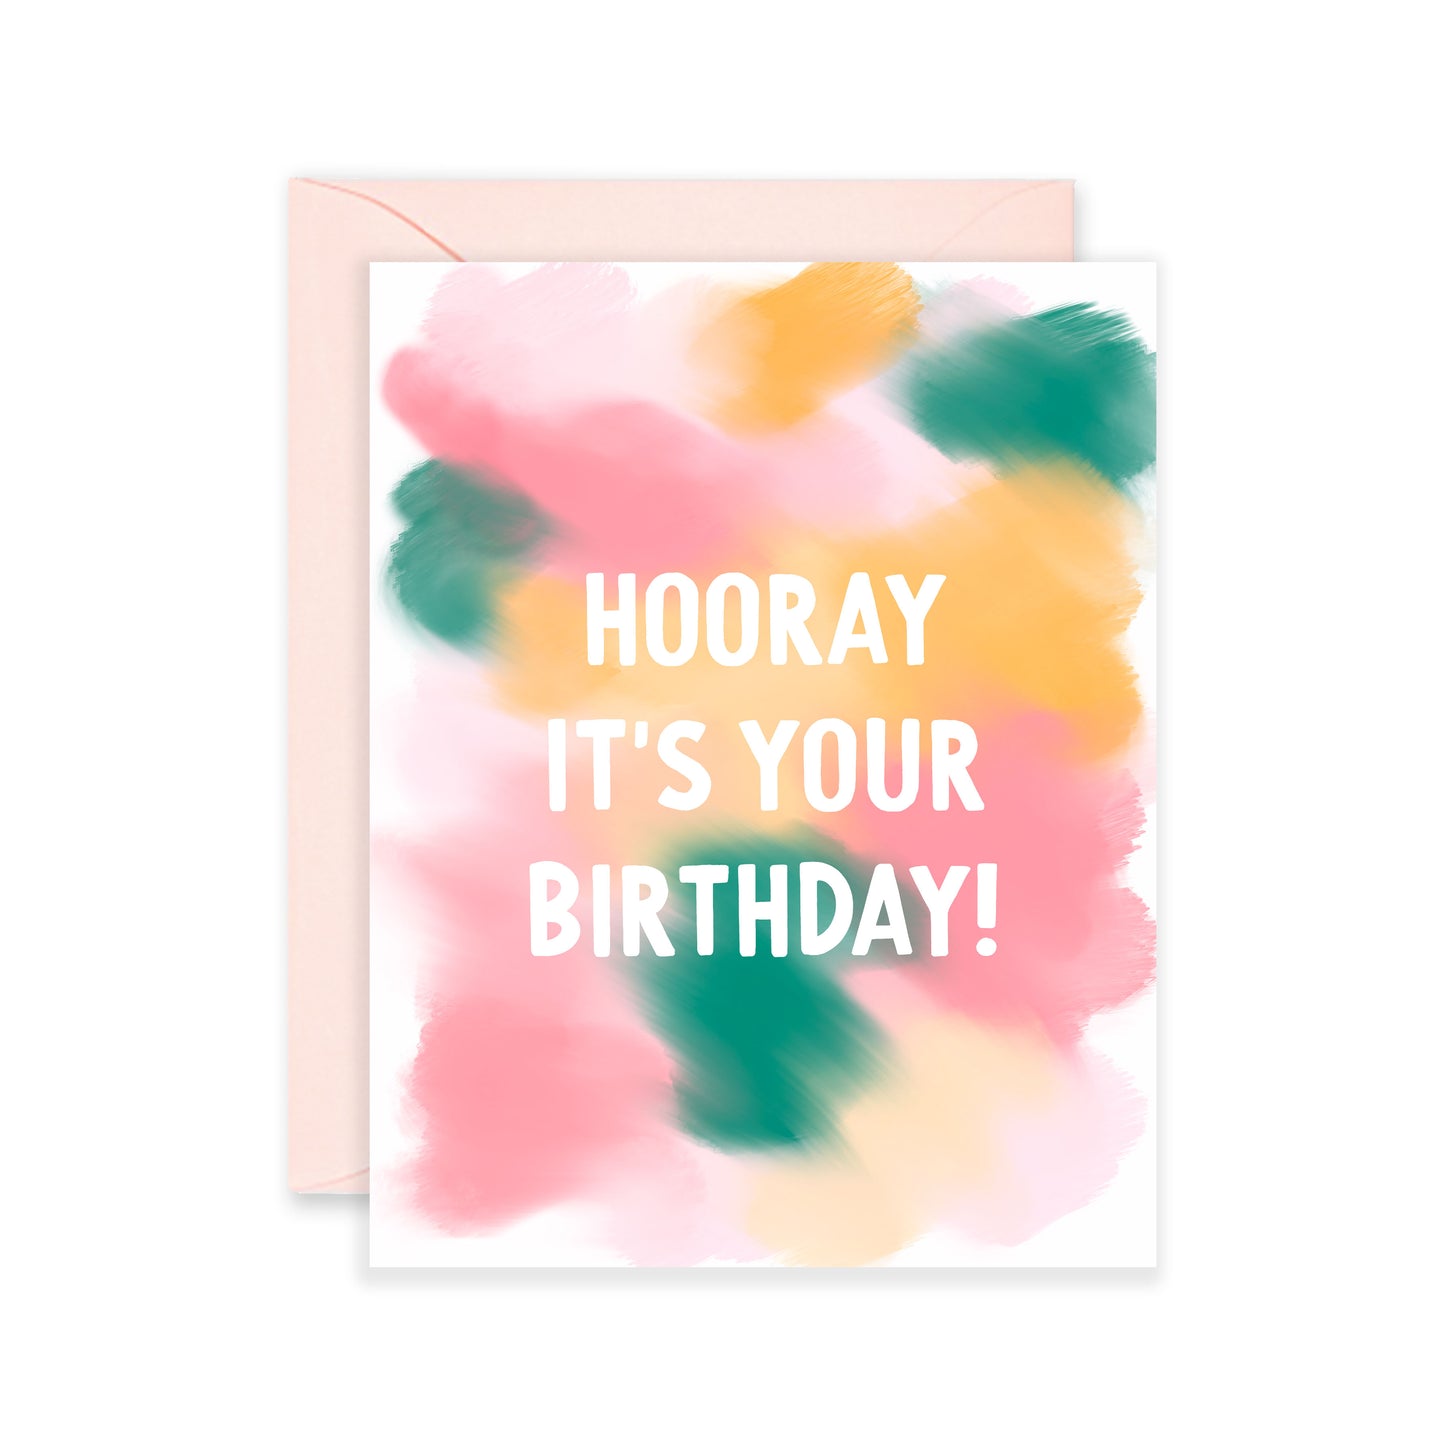 Colorful Hooray Birthday Greeting Card - $2